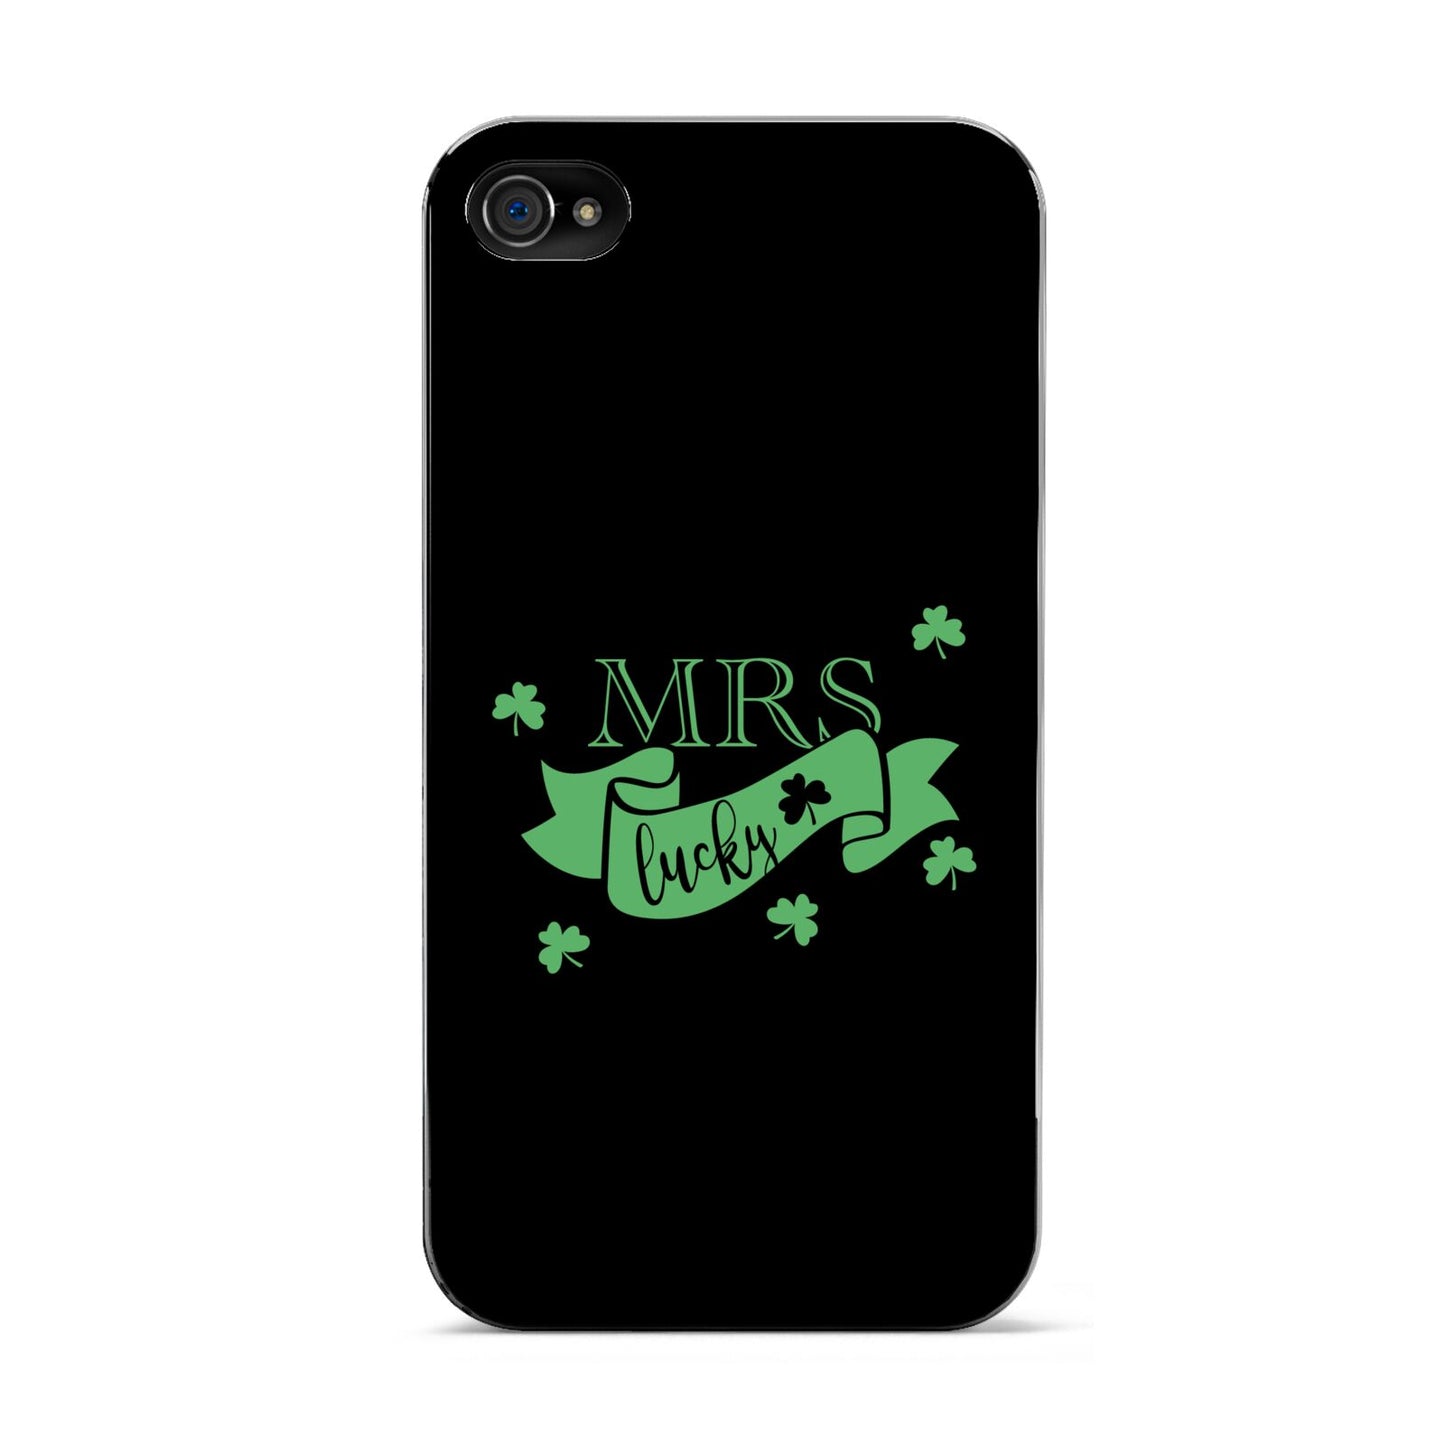 Mrs Lucky Apple iPhone 4s Case